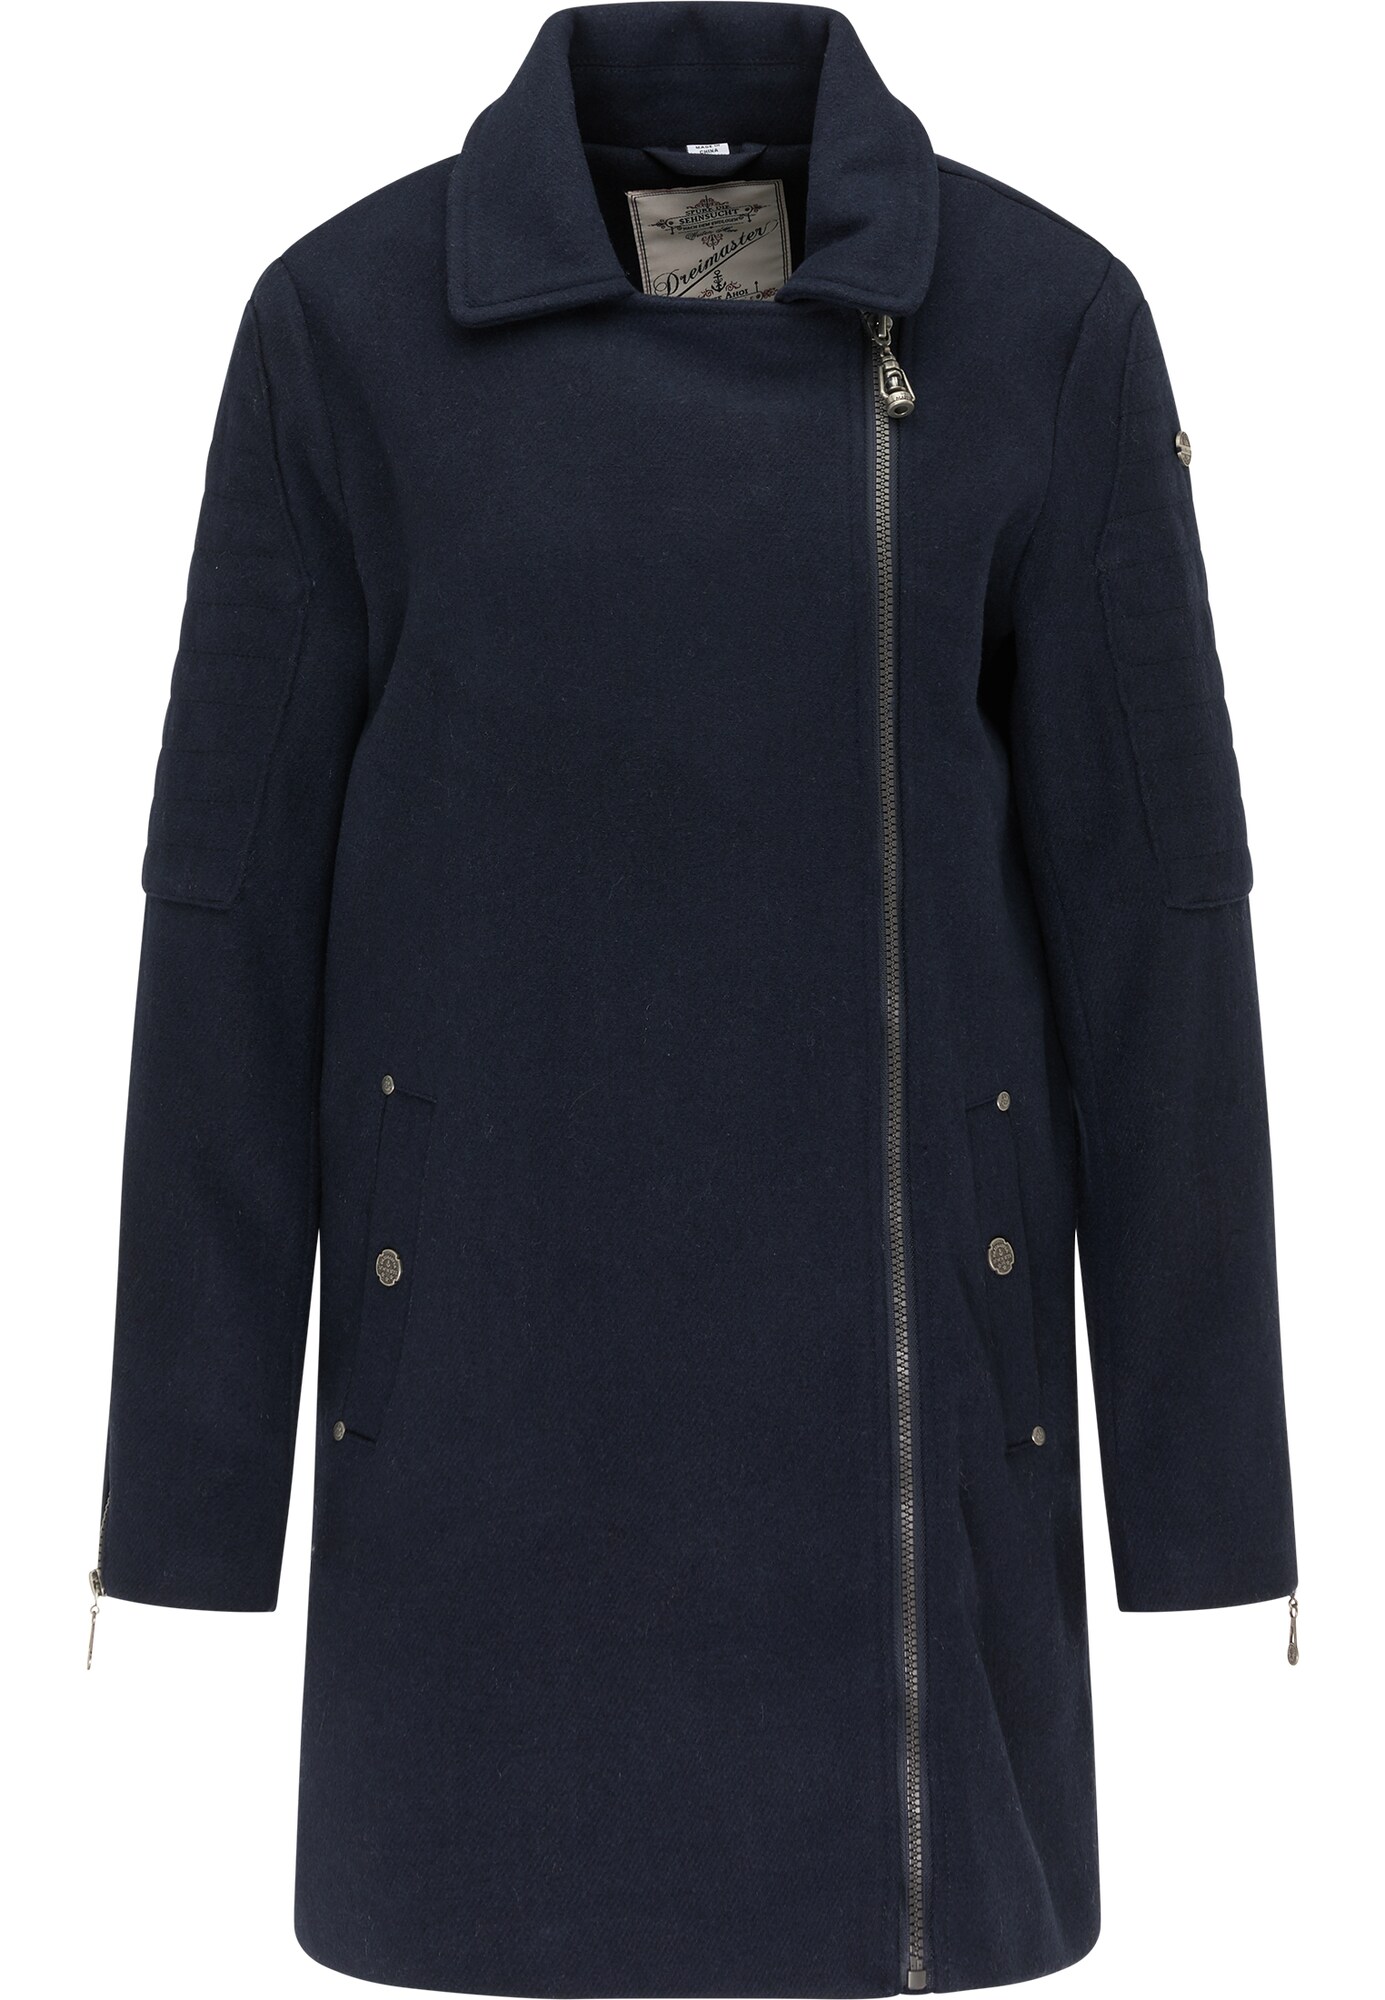 DreiMaster Vintage Rudeninis-žieminis paltas  nakties mėlyna